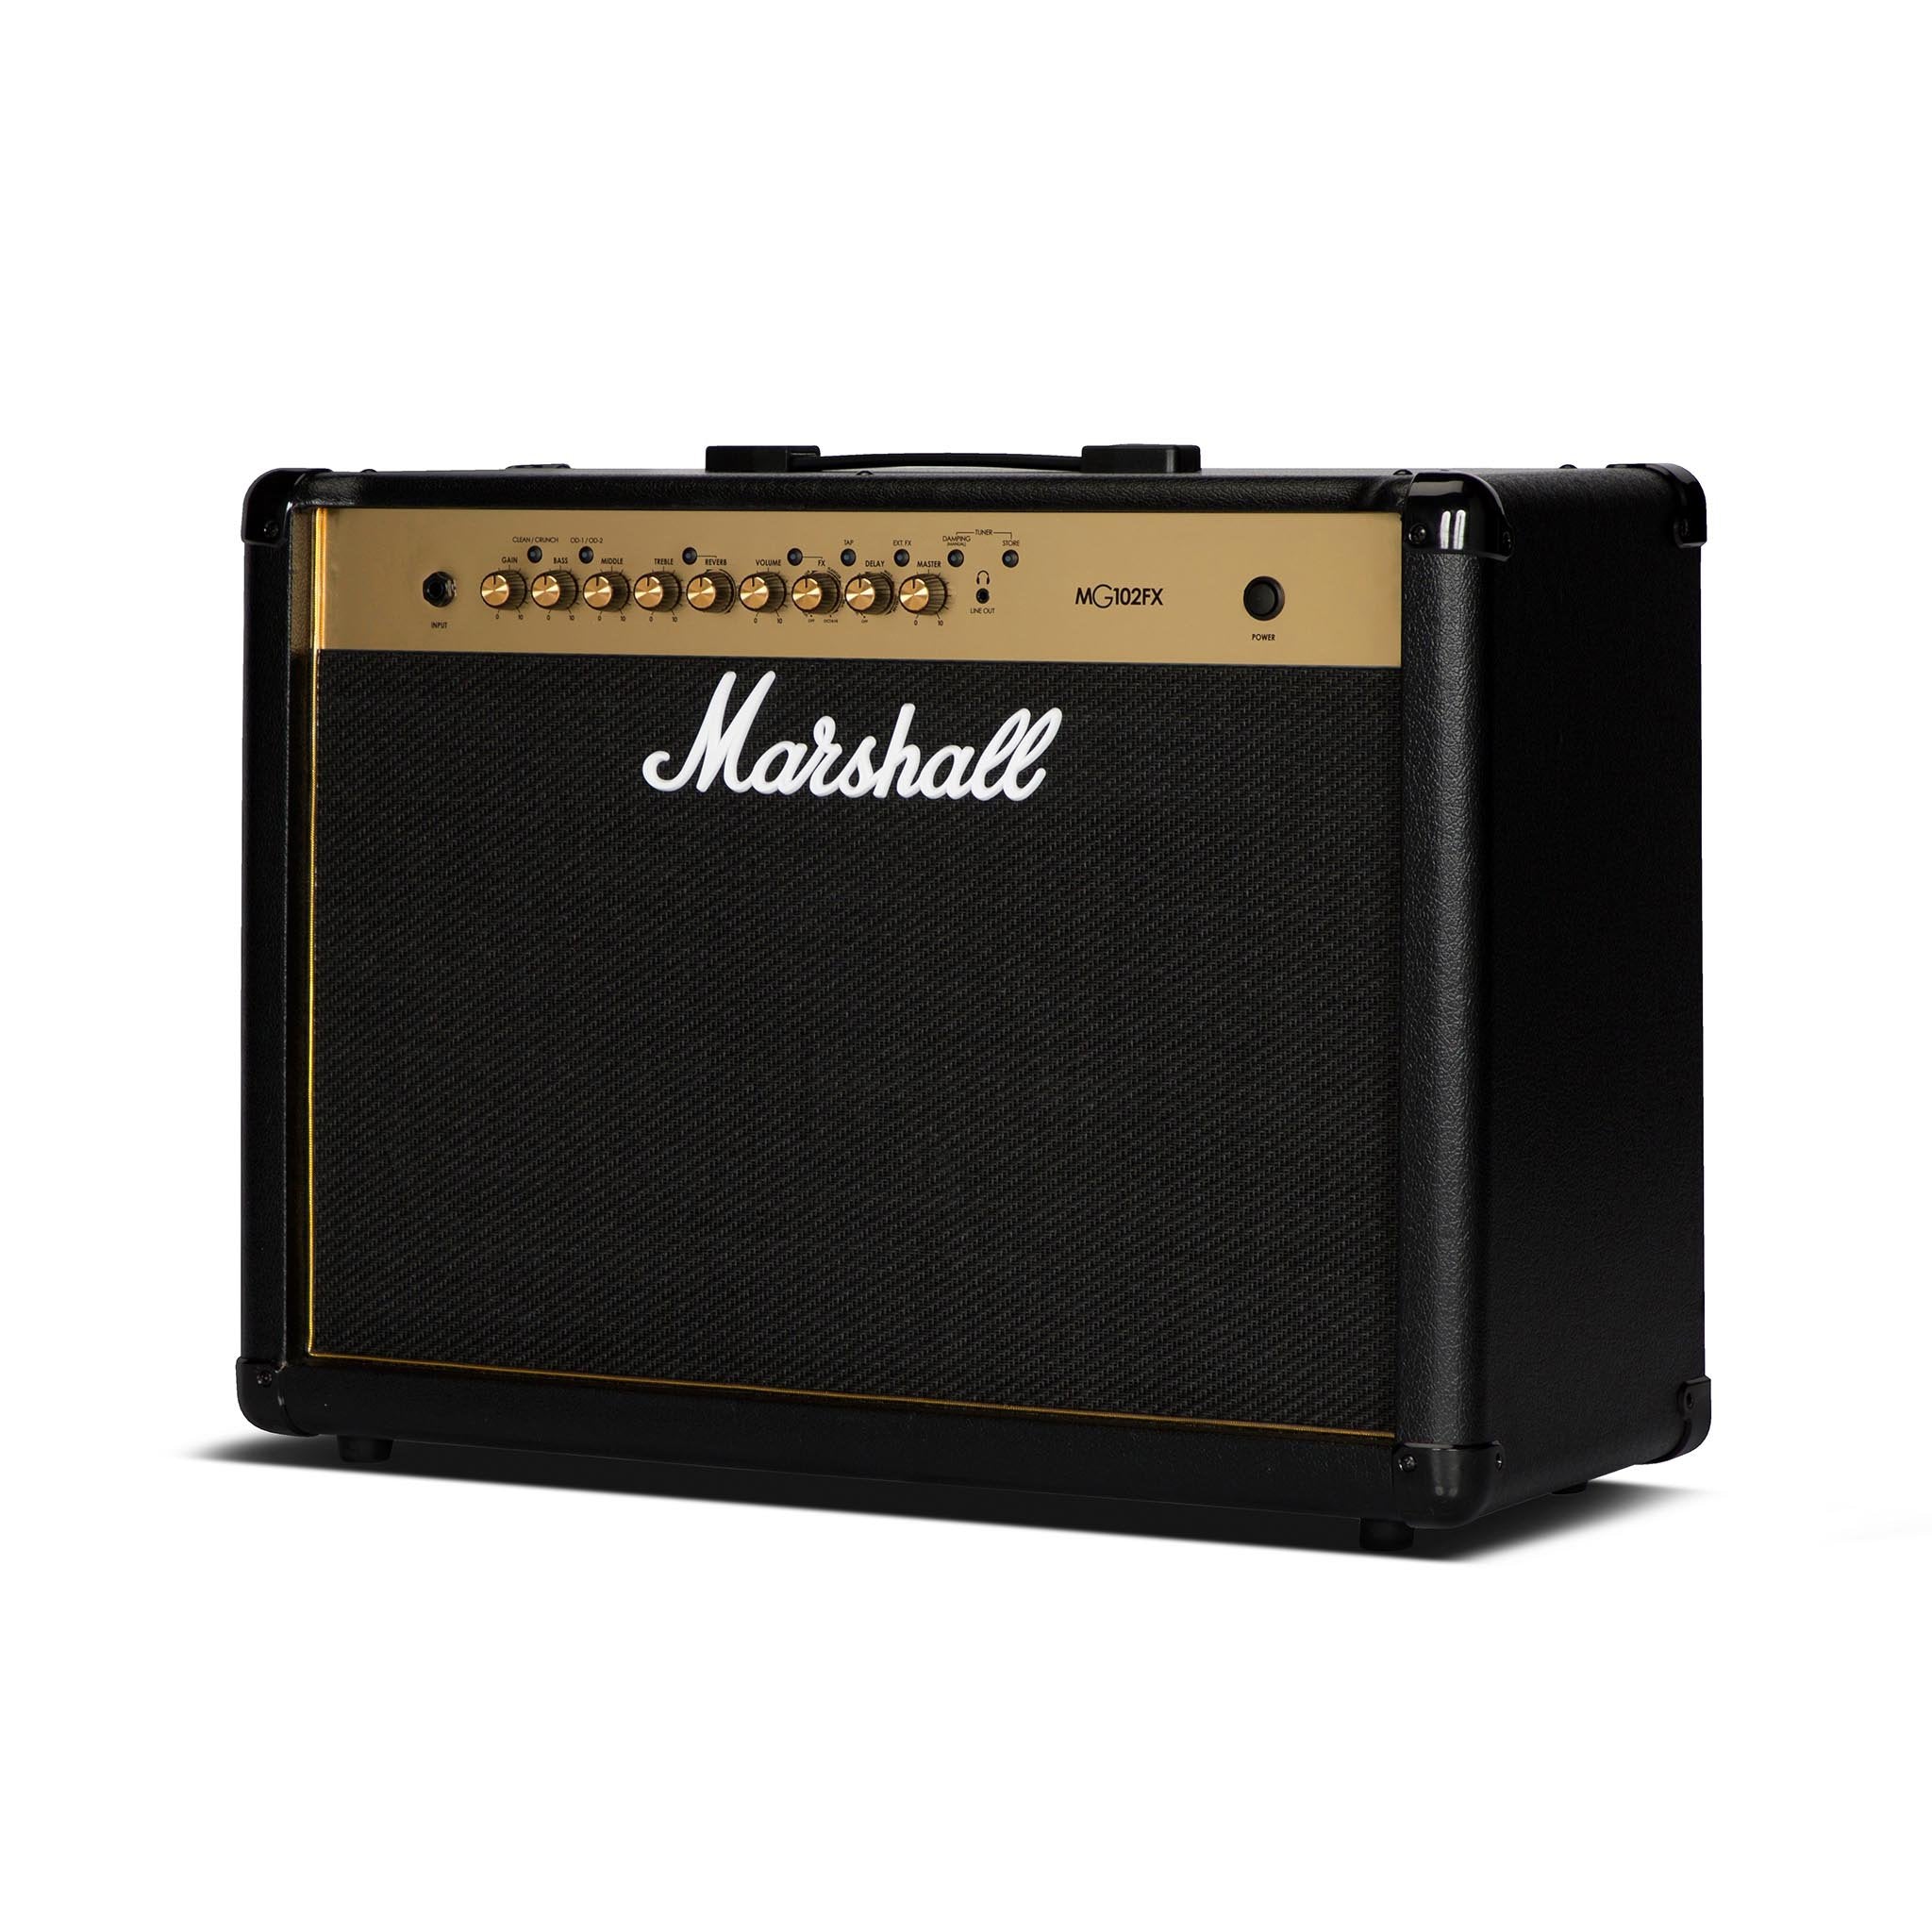 MARSHALL MG102GFX GOLD SERIES 2X12 100W GUITAR COMBO AMPLIFIER, MARSHALL, GUITAR AMPLIFIER, marshall-mg102gfx-gold-series-2x12-100w-guitar-combo-amplifier, ZOSO MUSIC SDN BHD